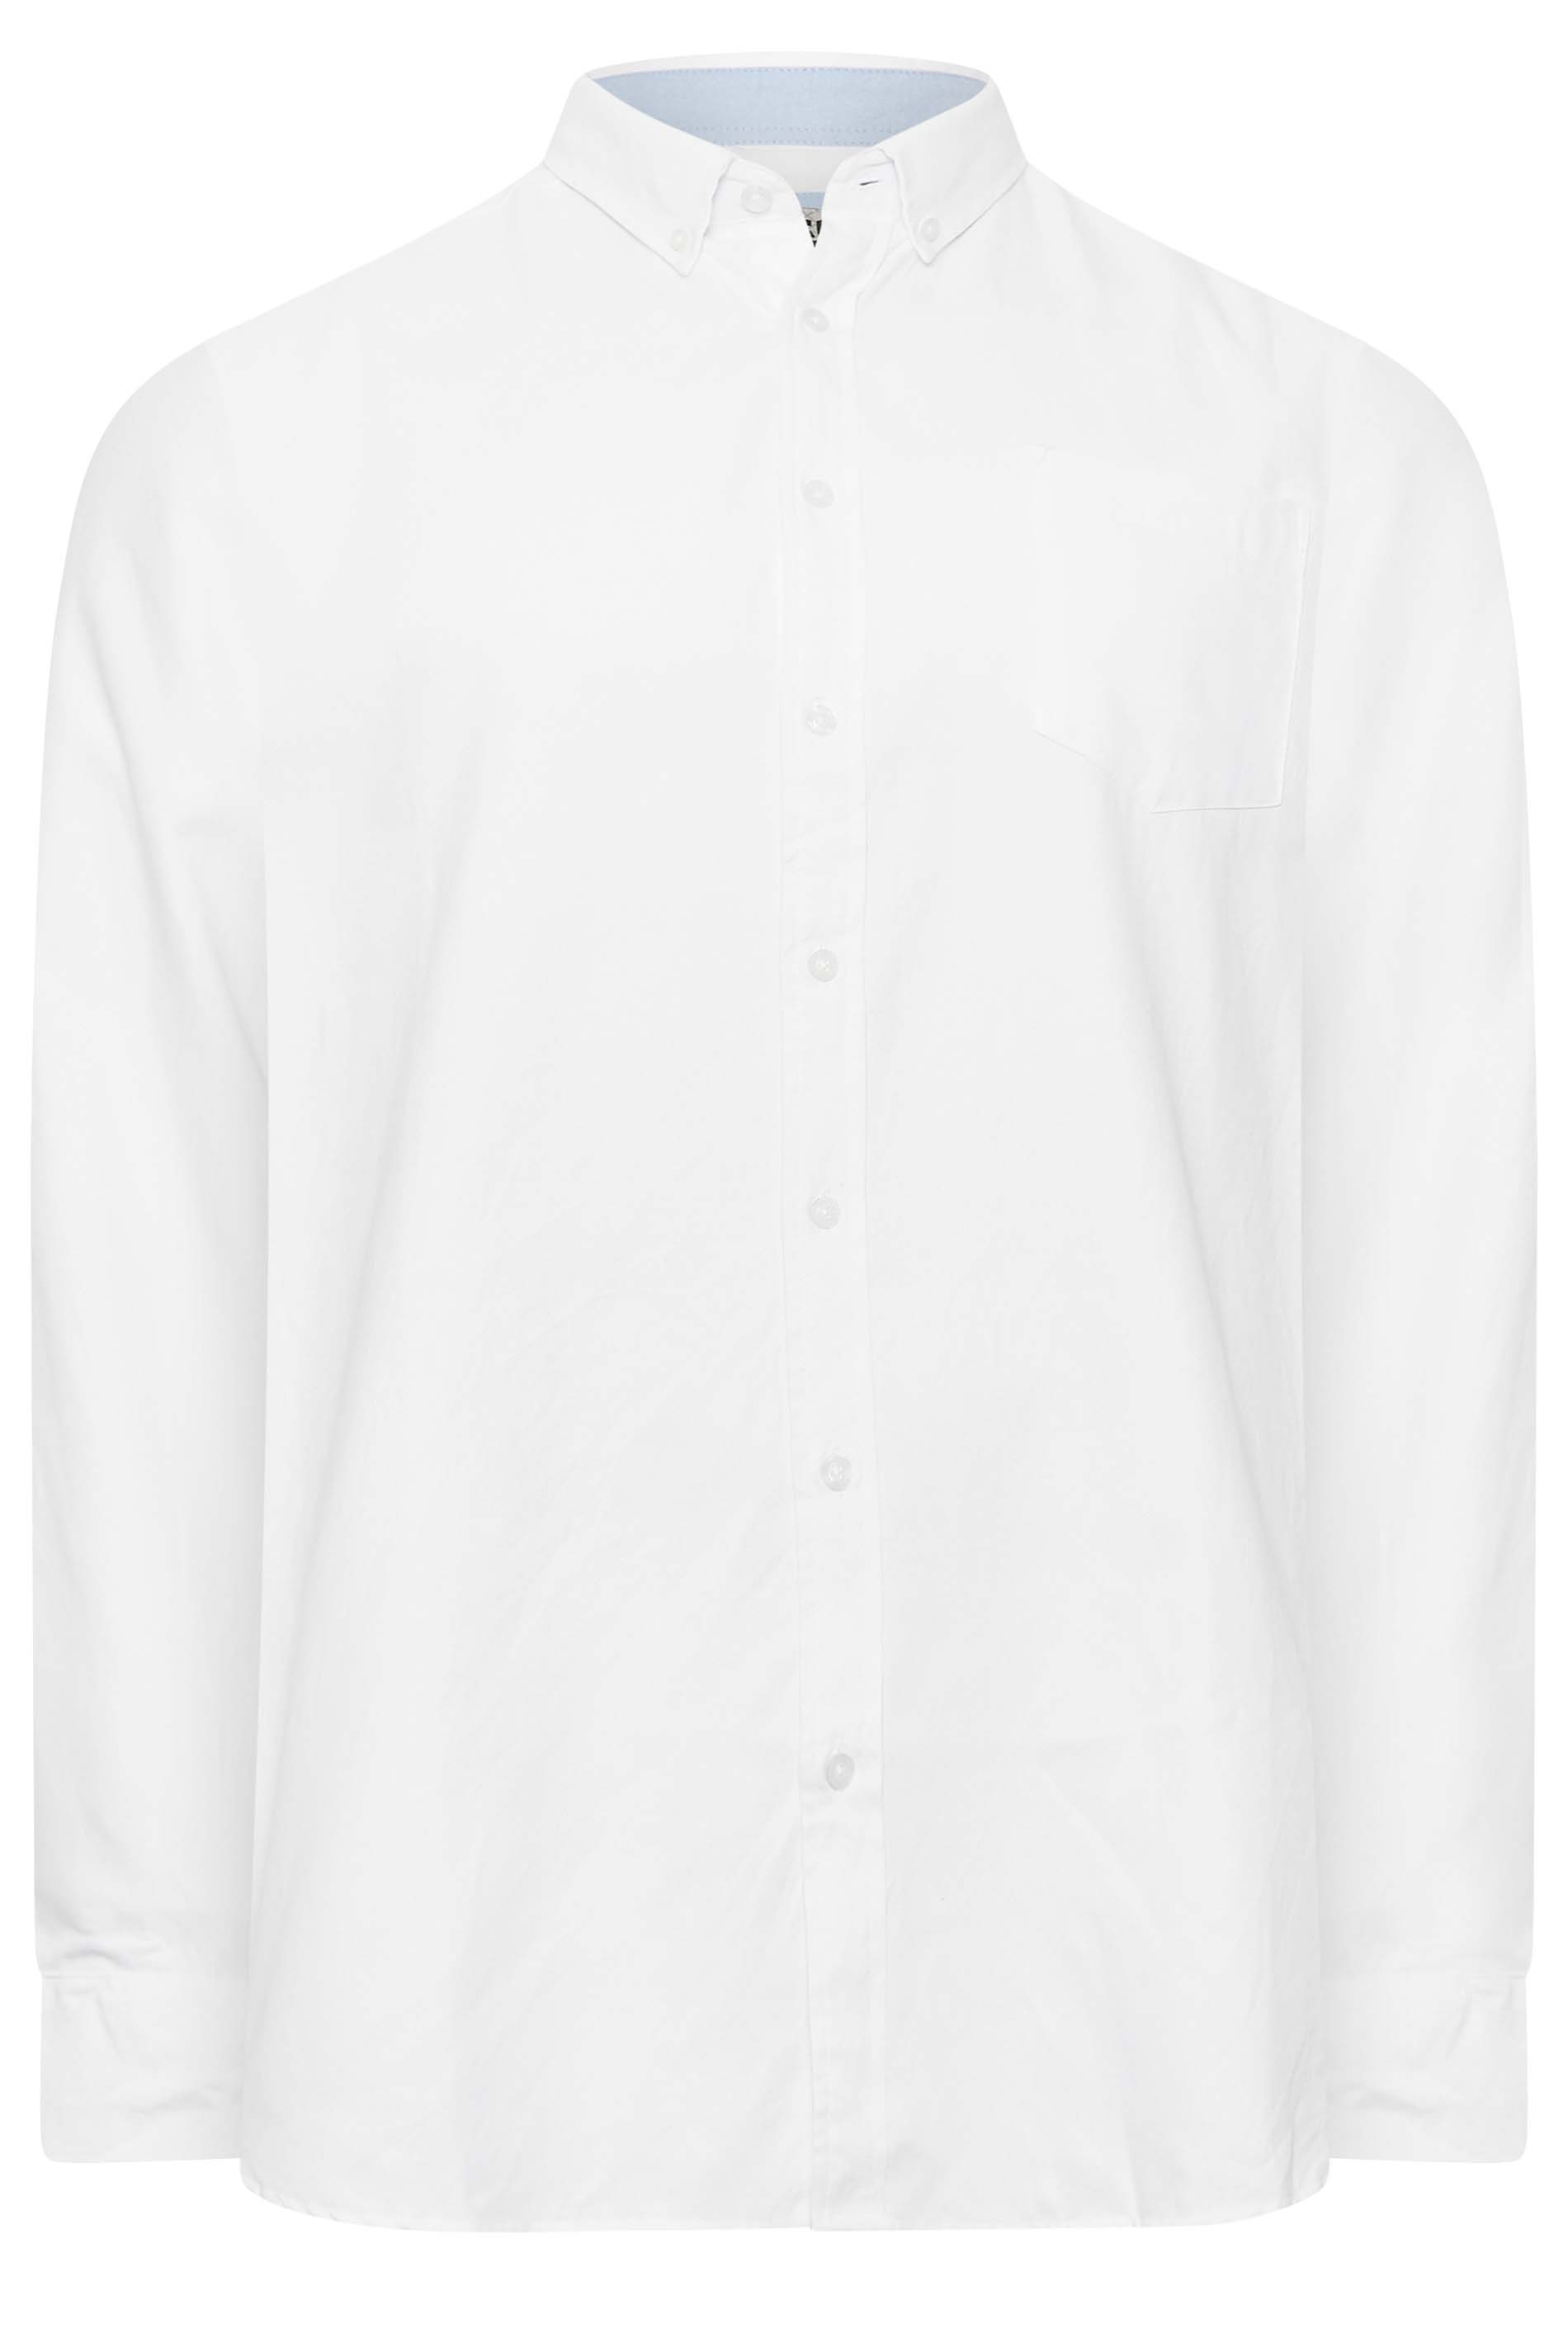 D555 Big & Tall White Long Sleeve Oxford Shirt | BadRhino 3